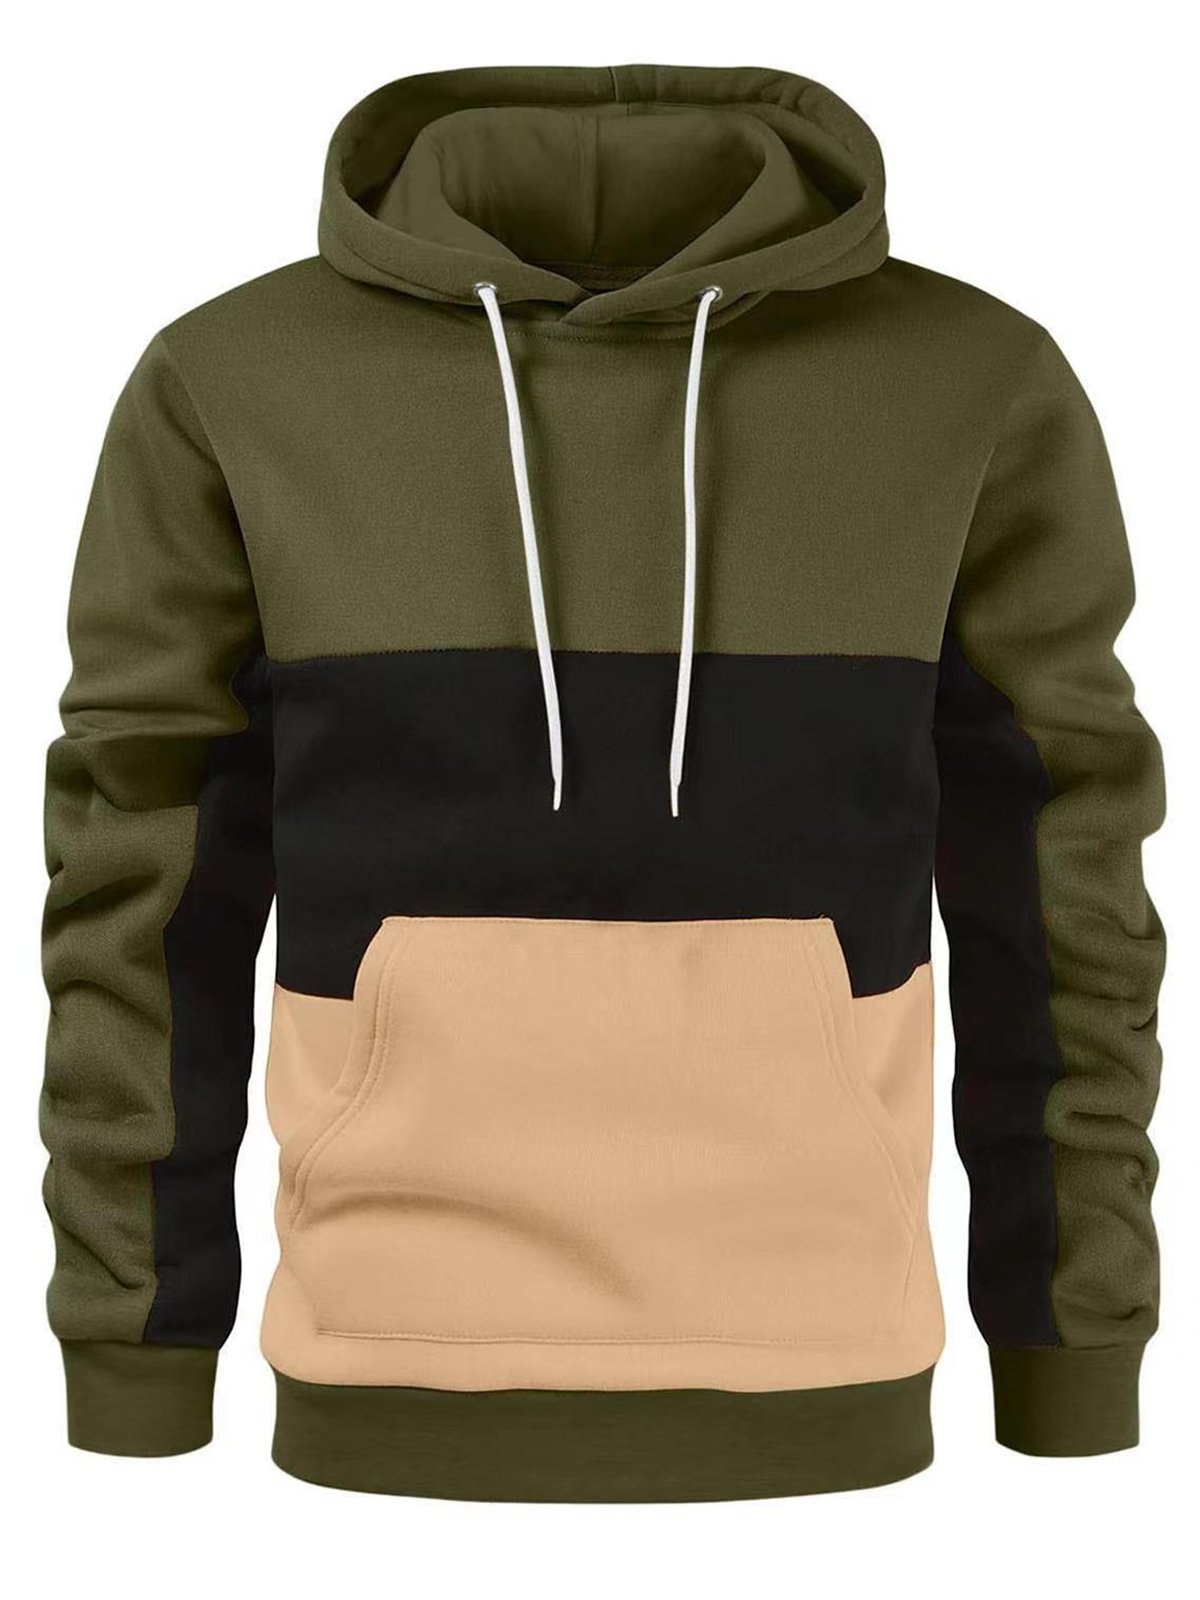 JoyMitty Casual Men's Drawstring Hoodies Sports Color Block Stitching Plus Size Pullover Sweatshirts